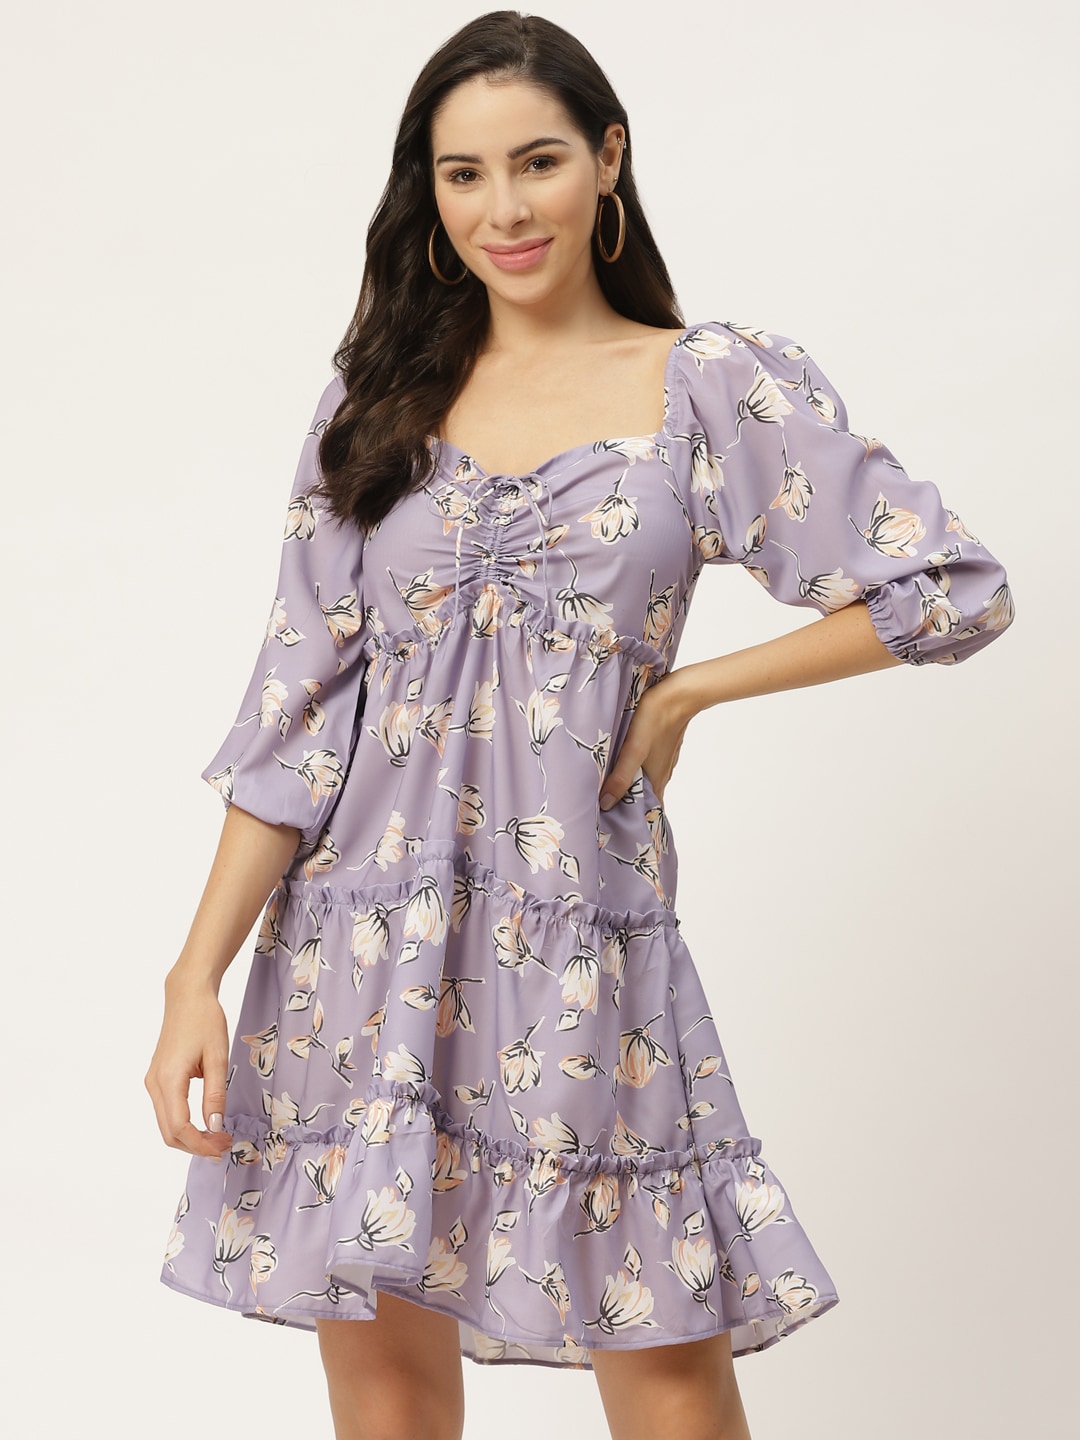 MELOSO Women Lavender & White Printed A-Line Dress